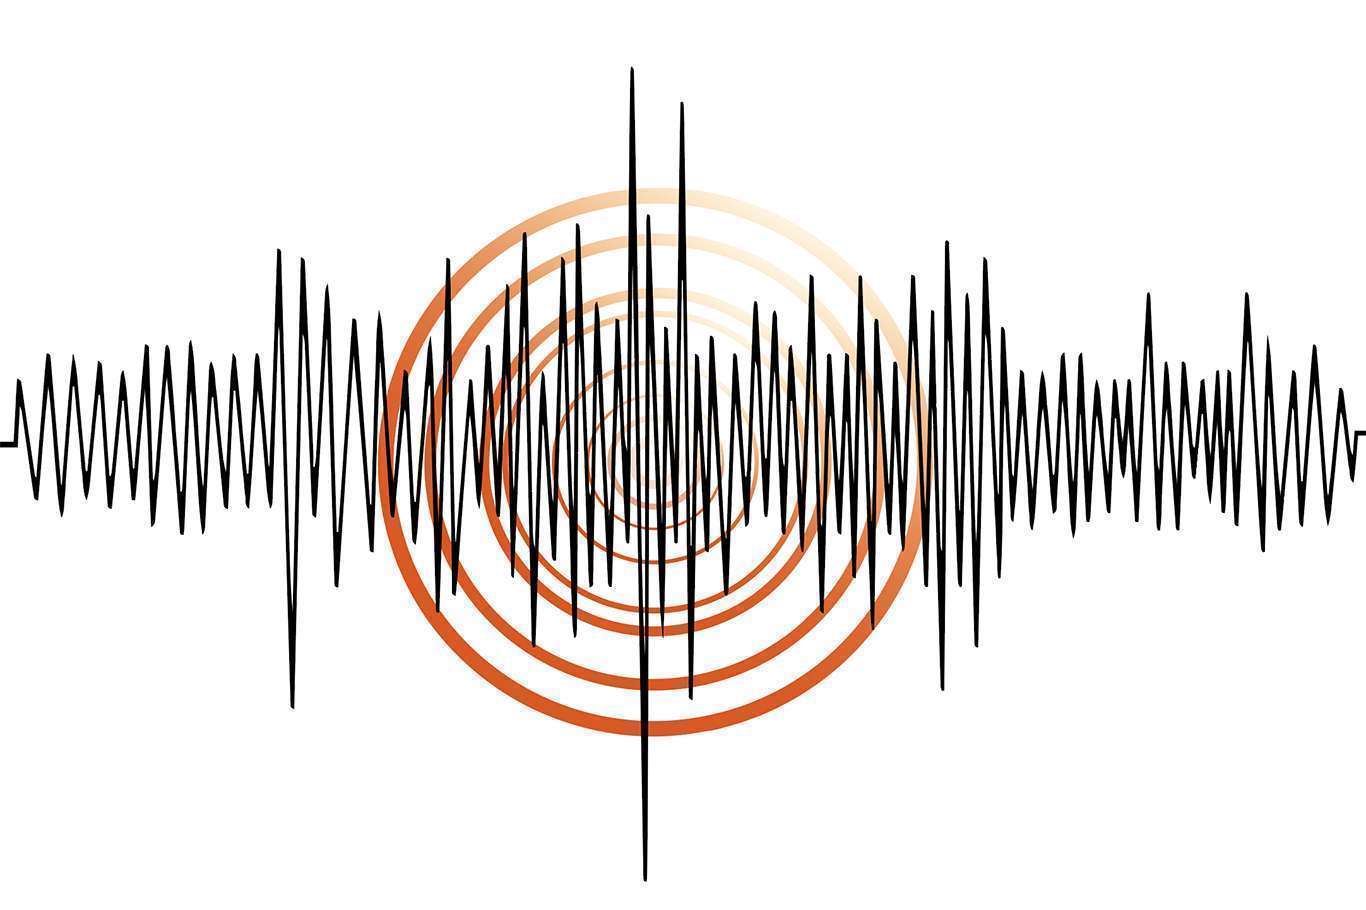 4.1 magnitude earthquake occurs off Turkey’s Mediterranean coast